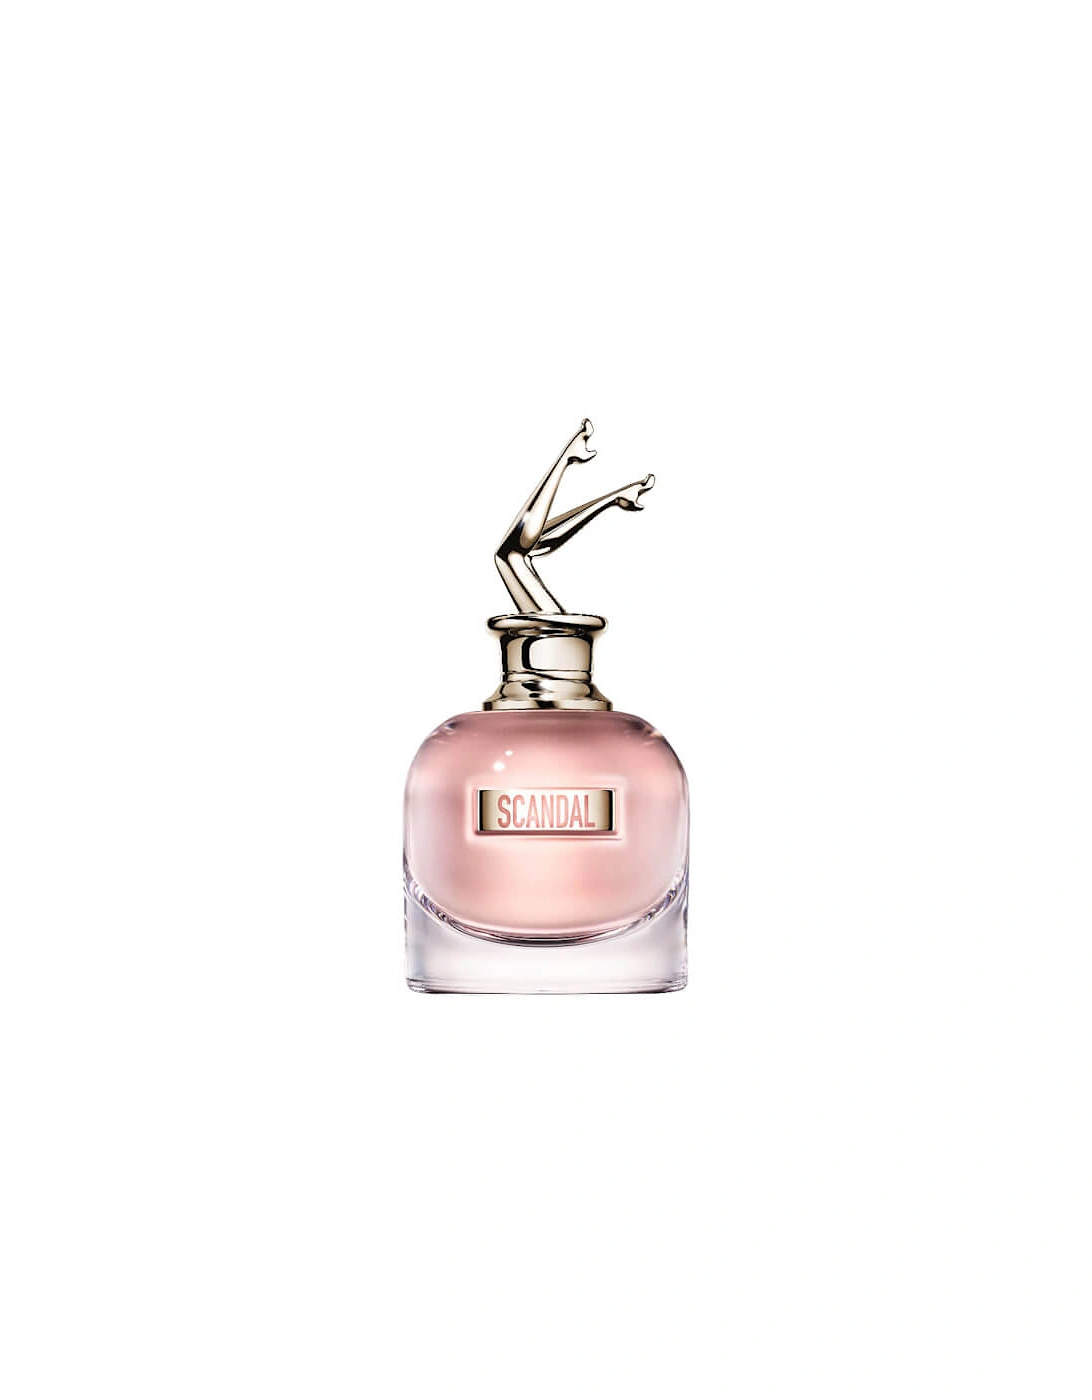 Scandal Eau de Parfum Spray - 80ml - Jean Paul Gaultier, 2 of 1